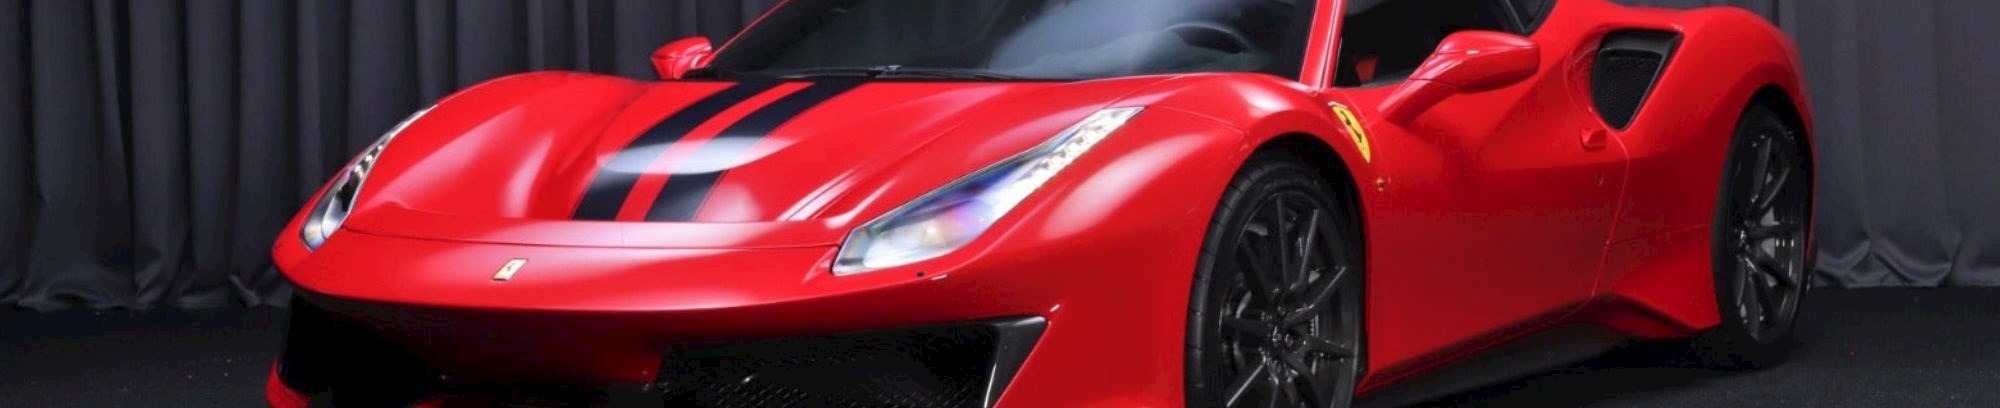 Formula-Automobile-Ferrari